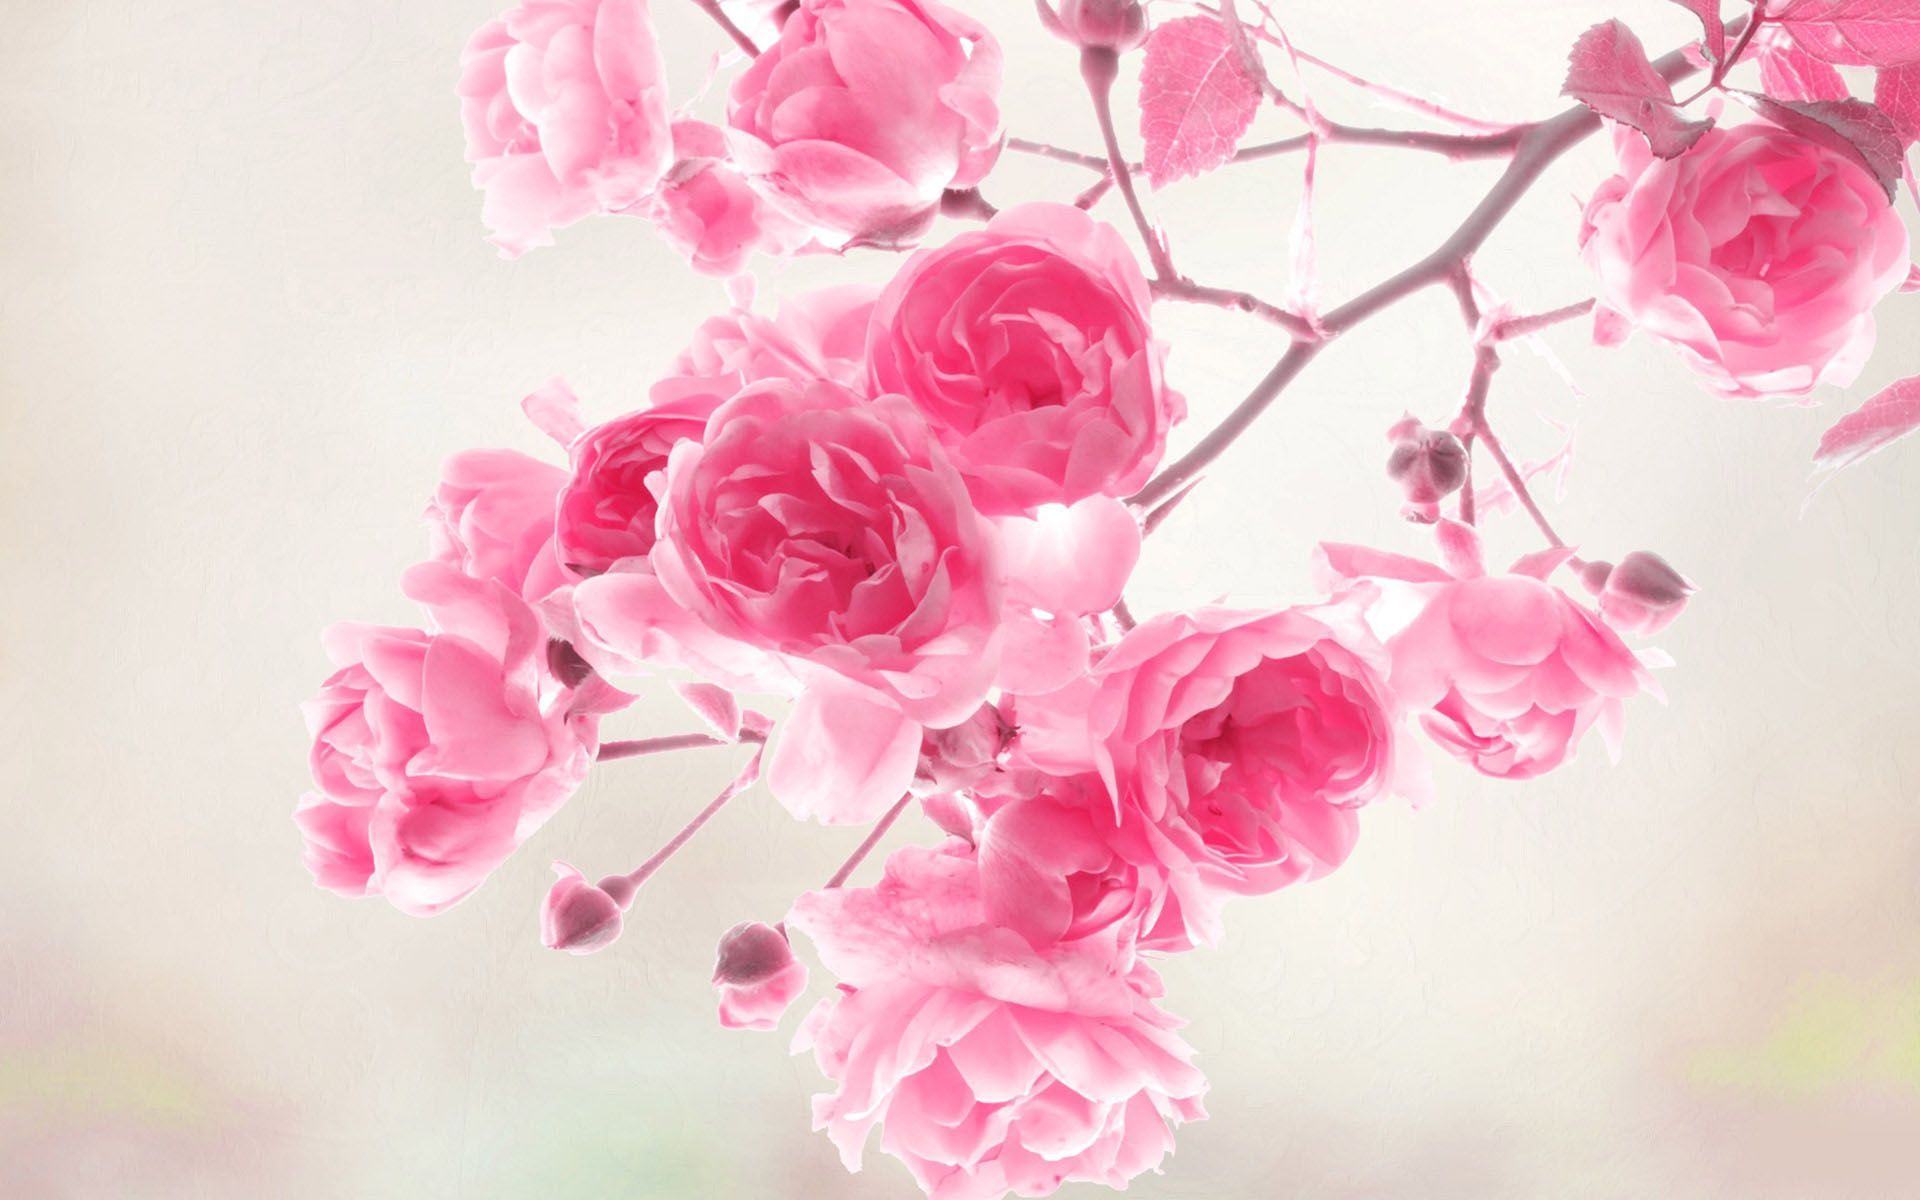 40 Beautiful Flower Wallpapers for your desktop